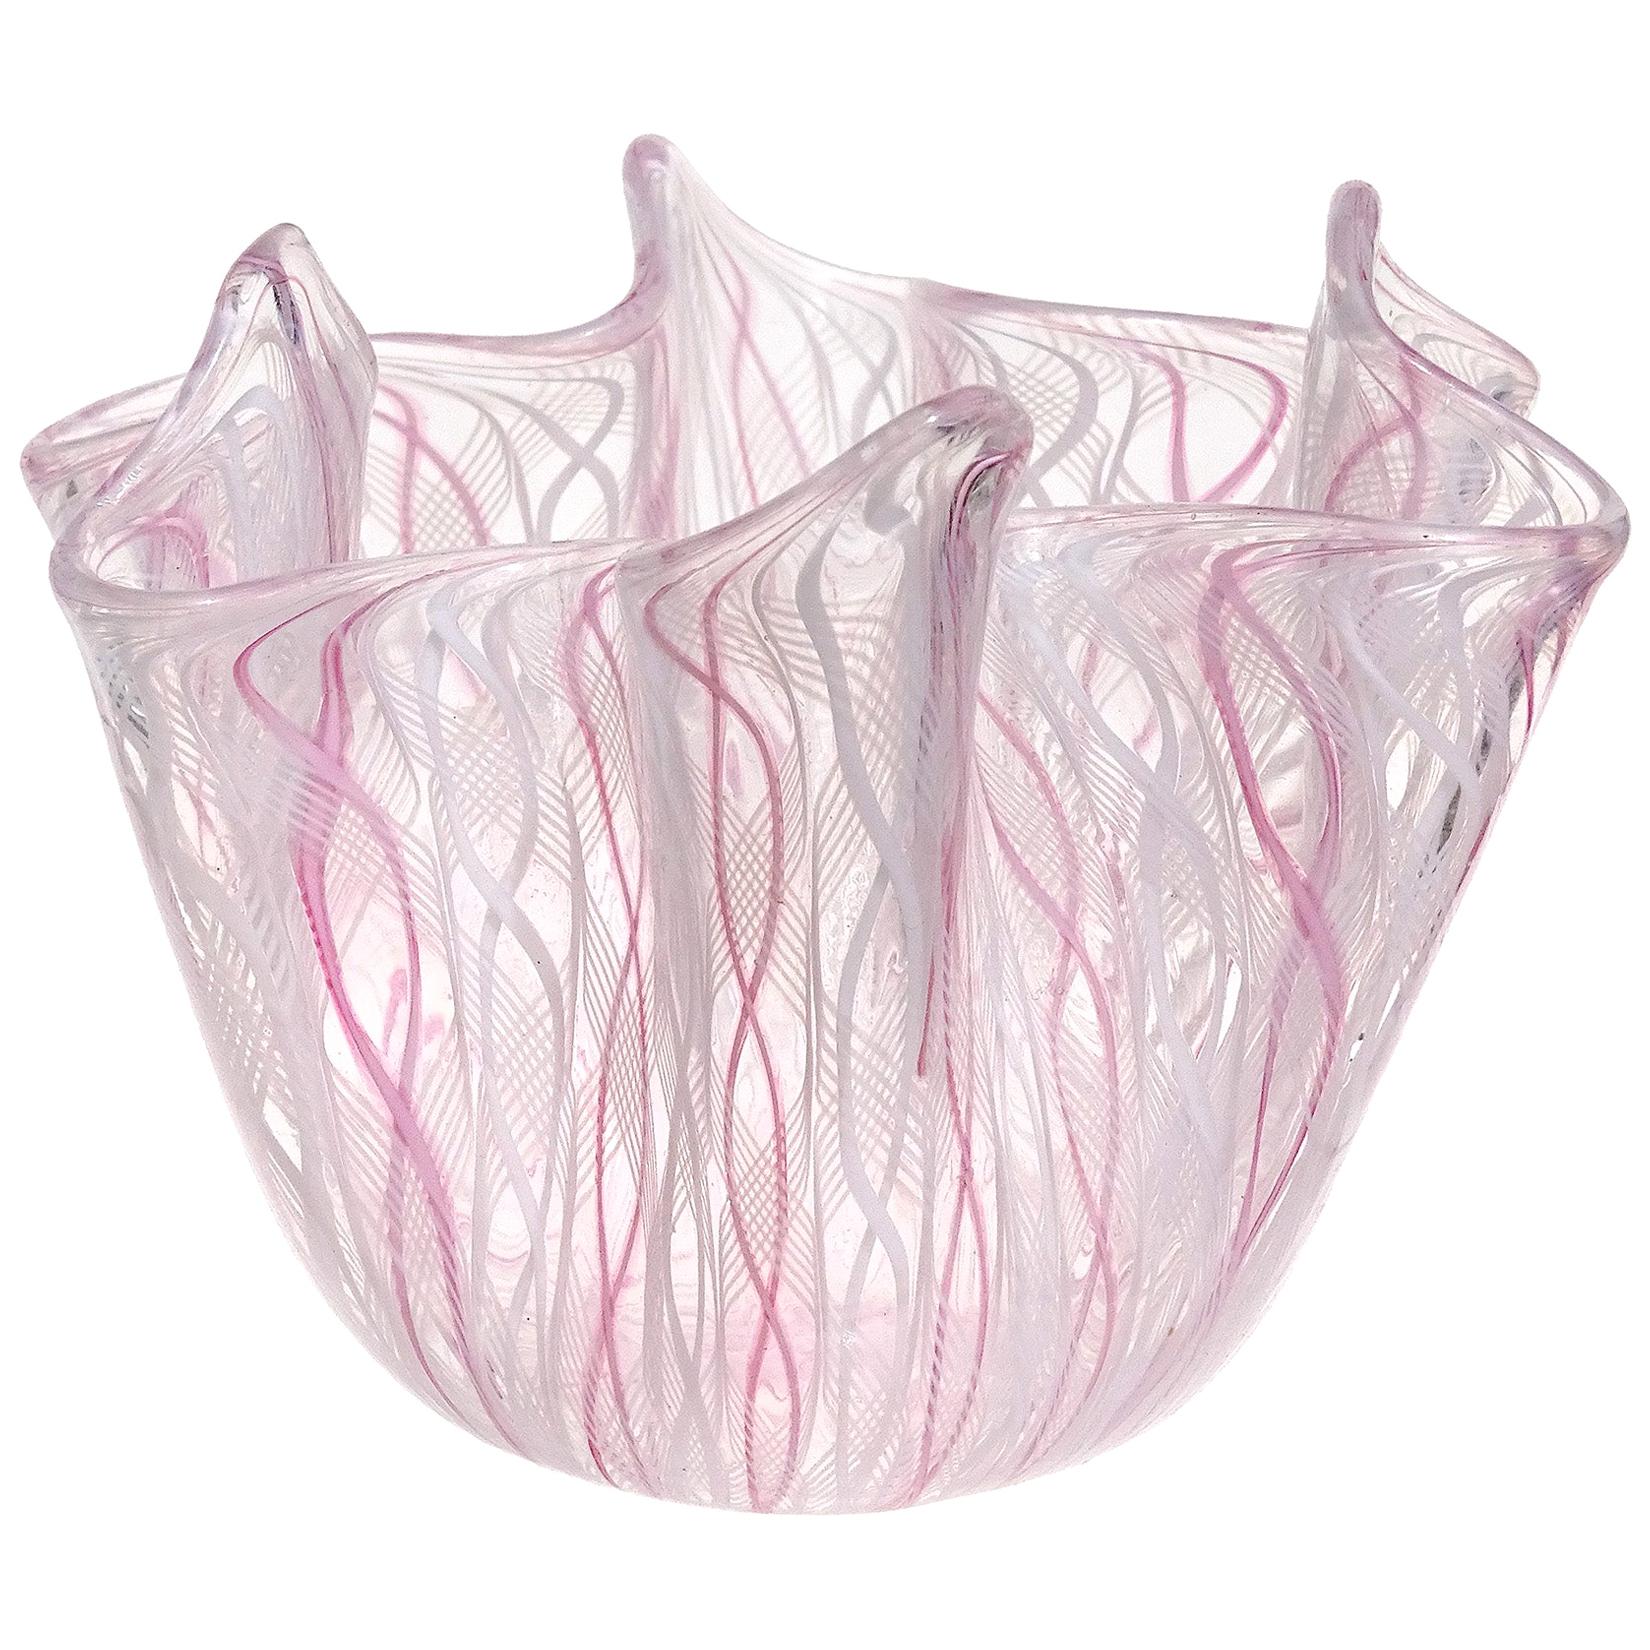 Venini Bianconi Murano Pink White Italian Art Glass Fazzoletto Handkerchief Vase